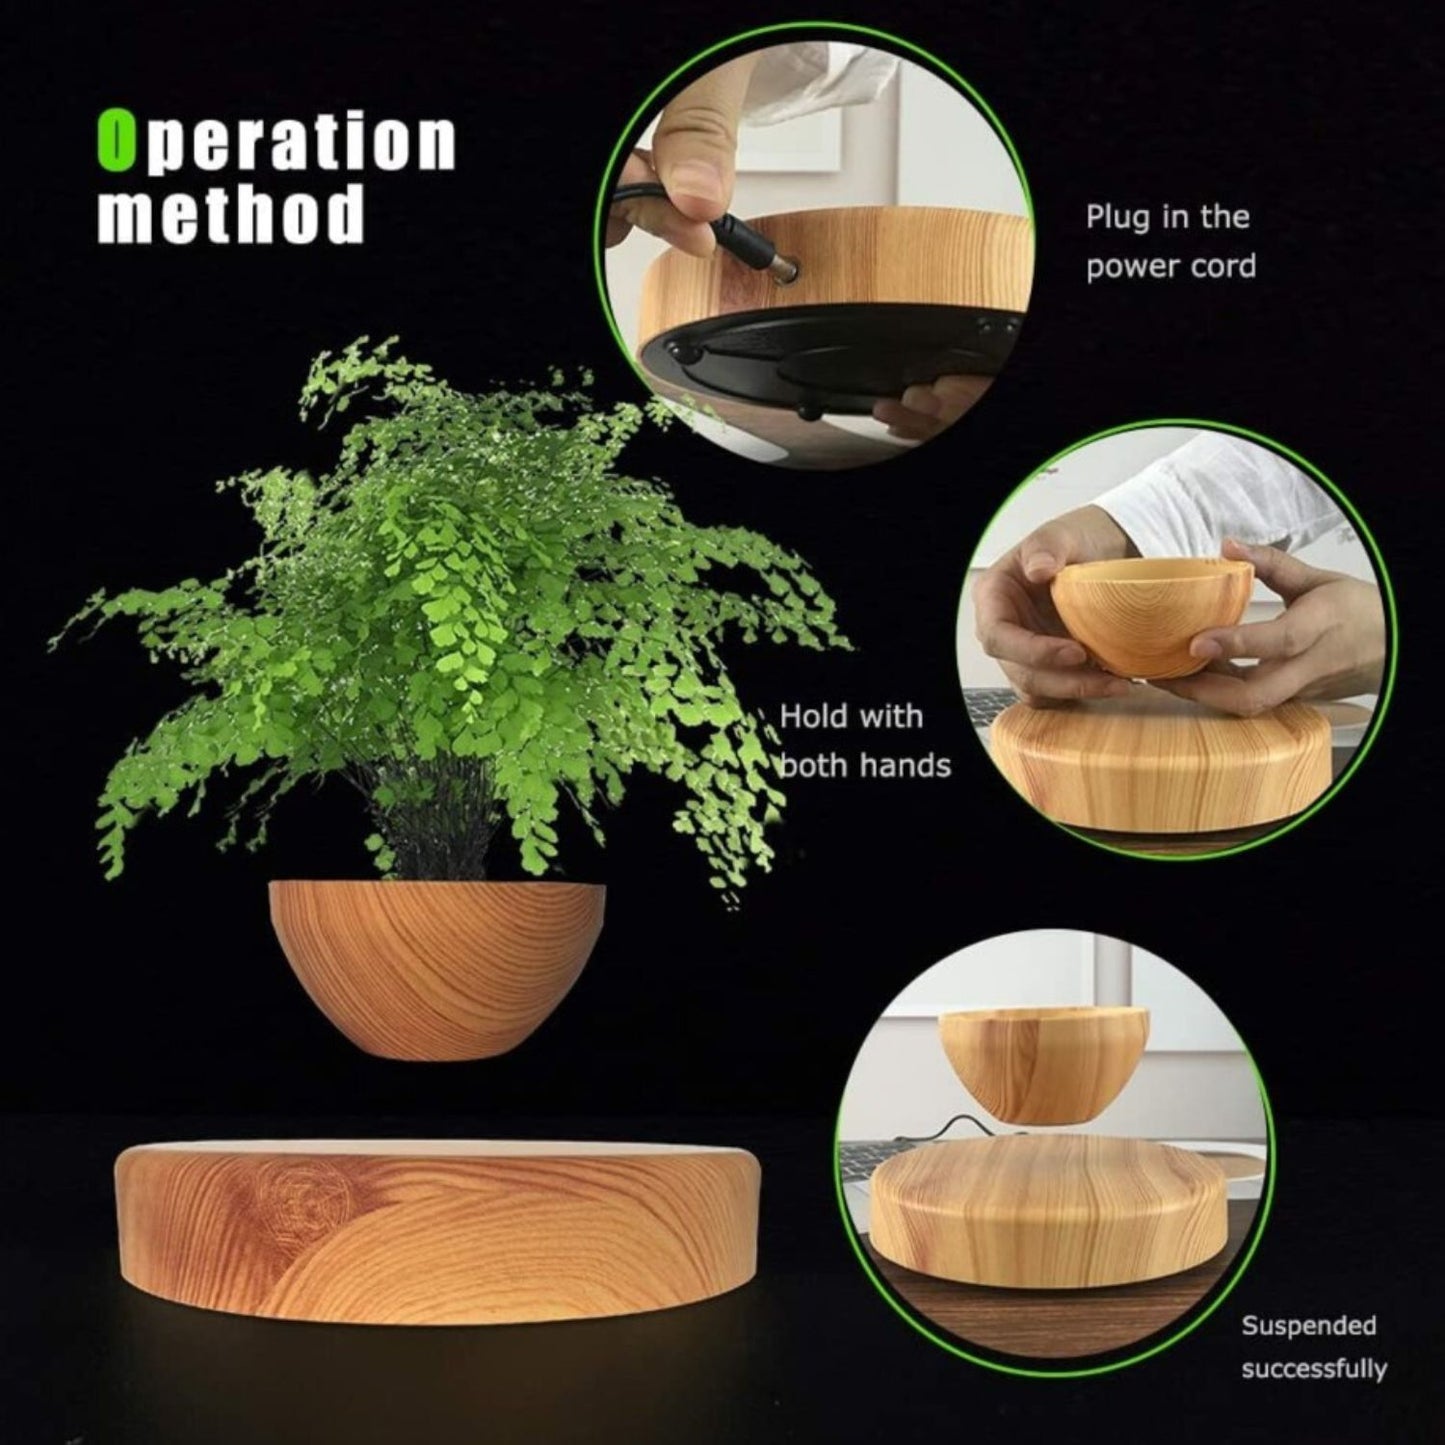 GOMINIMO Magnetic Levitating Plant Pot Oak